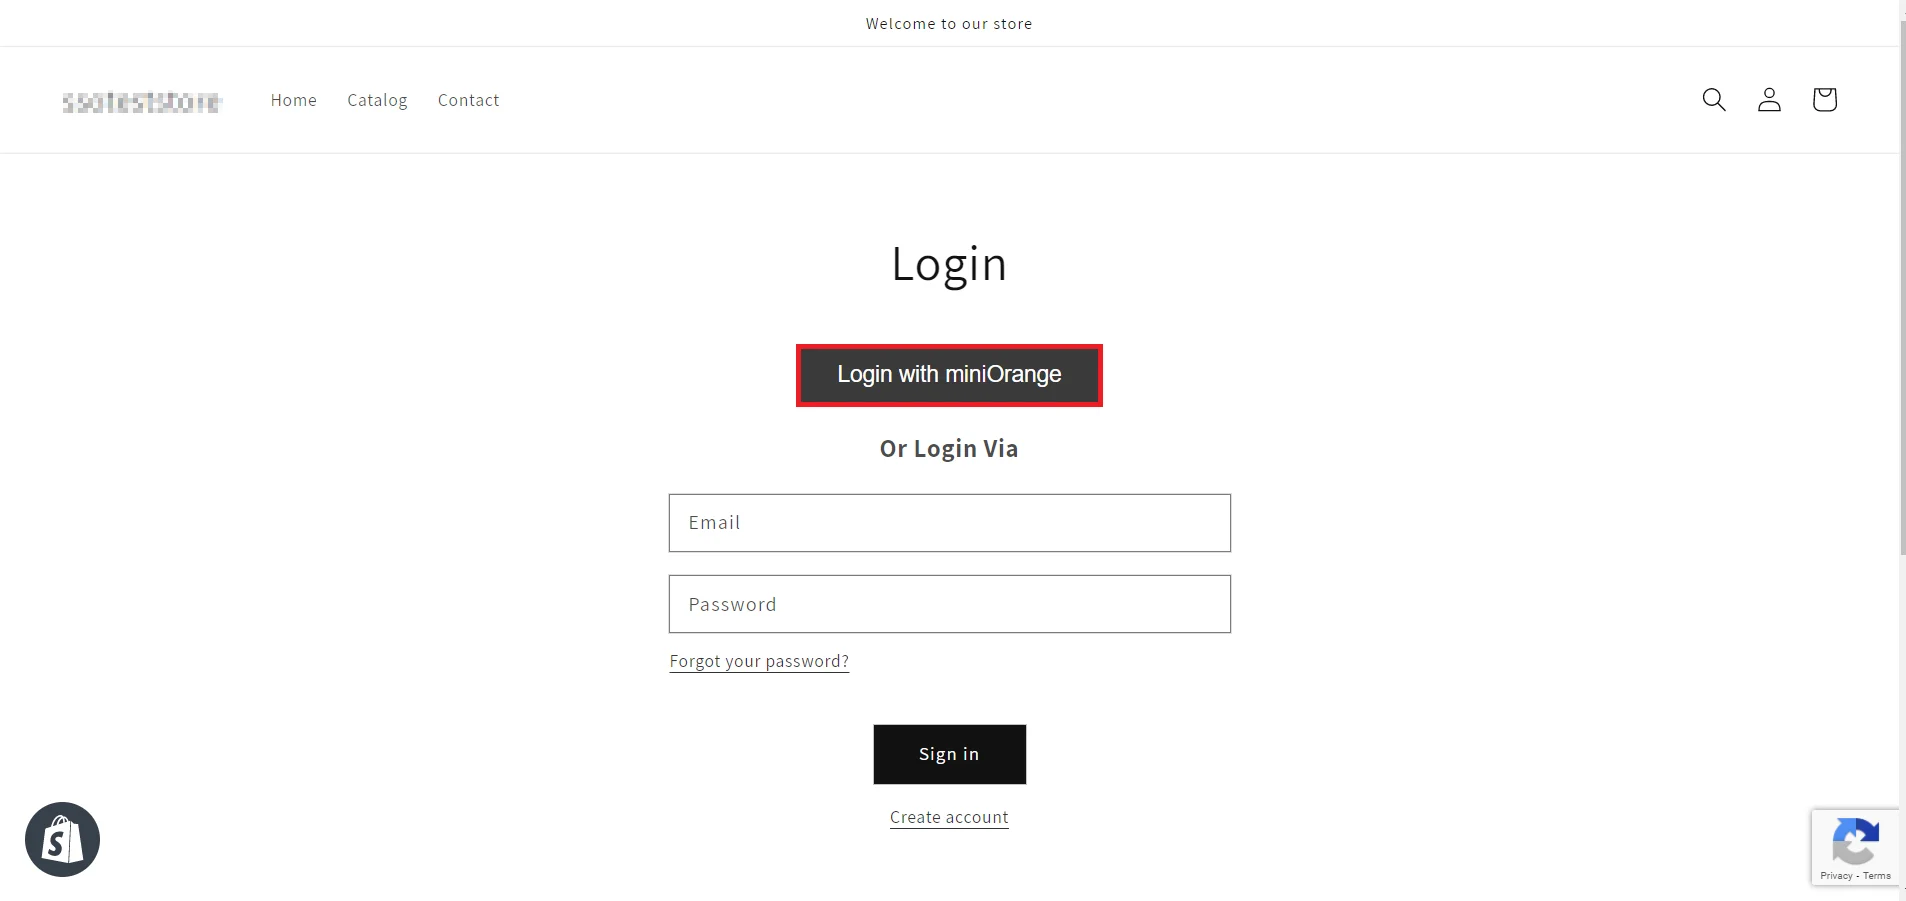 miniorange Shopify SSO - login with miniorange shopify - click on login button